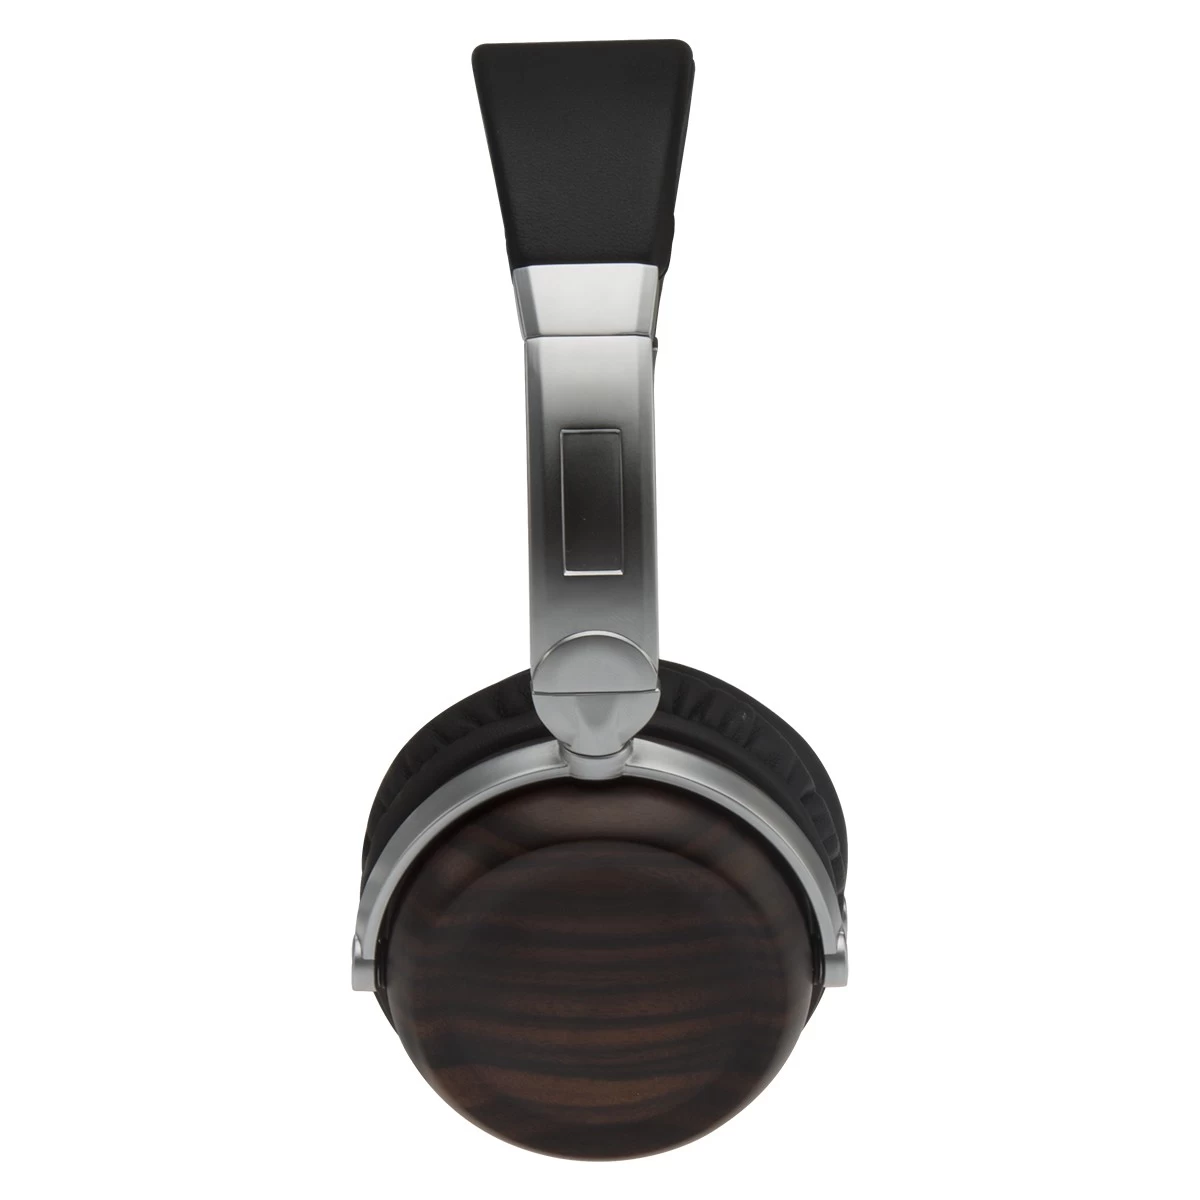 Bluetooth  wood   headphone HEP-0143 NEW